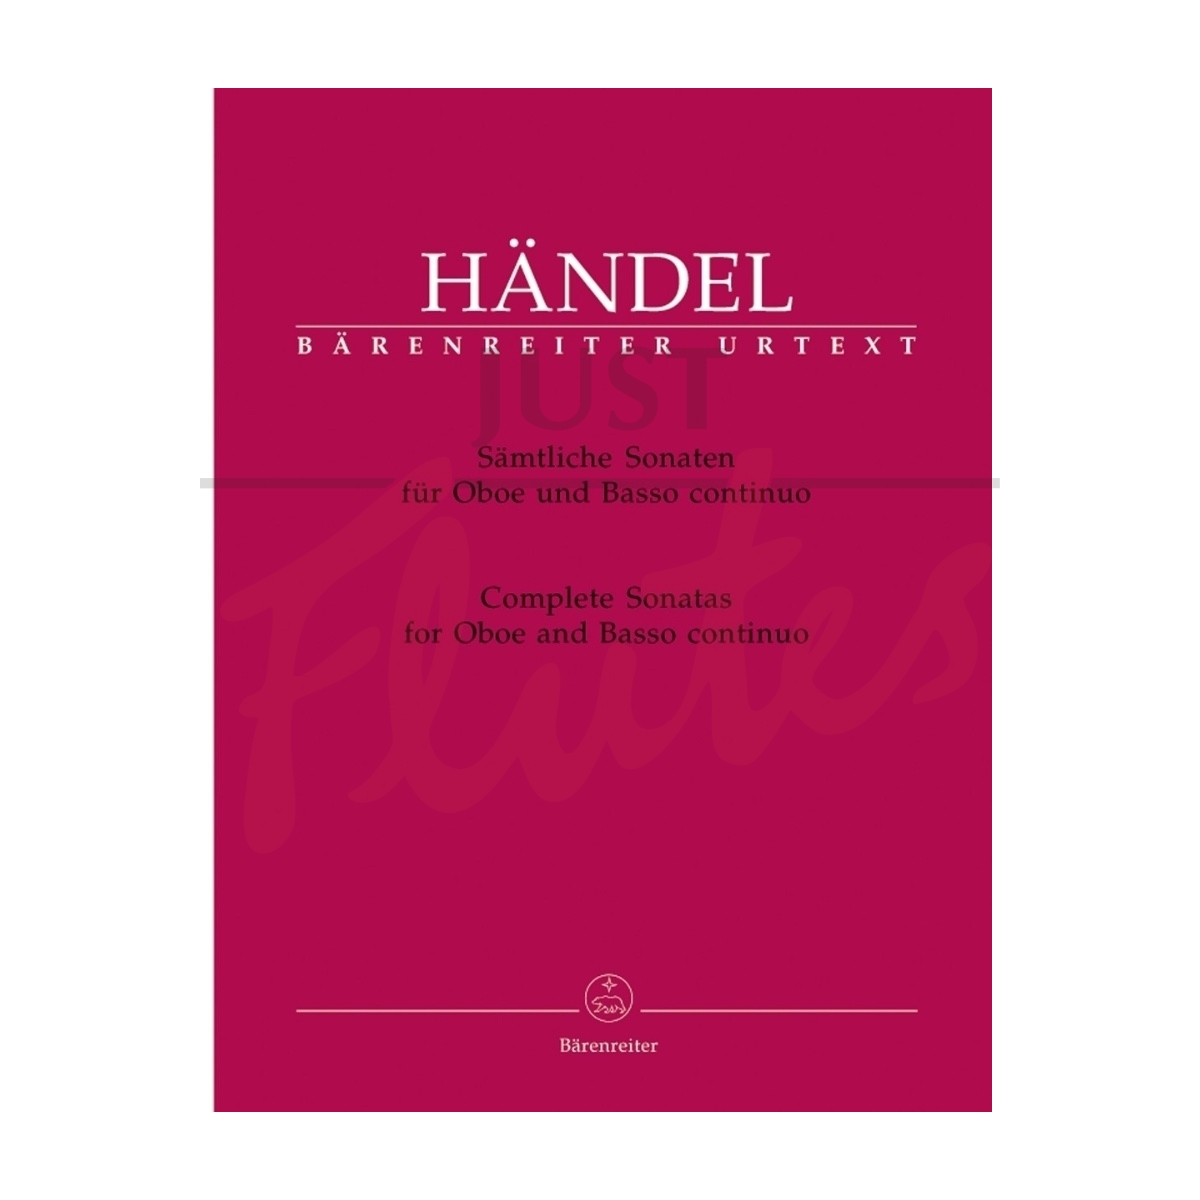 Complete Sonatas for Oboe and Basso Continuo